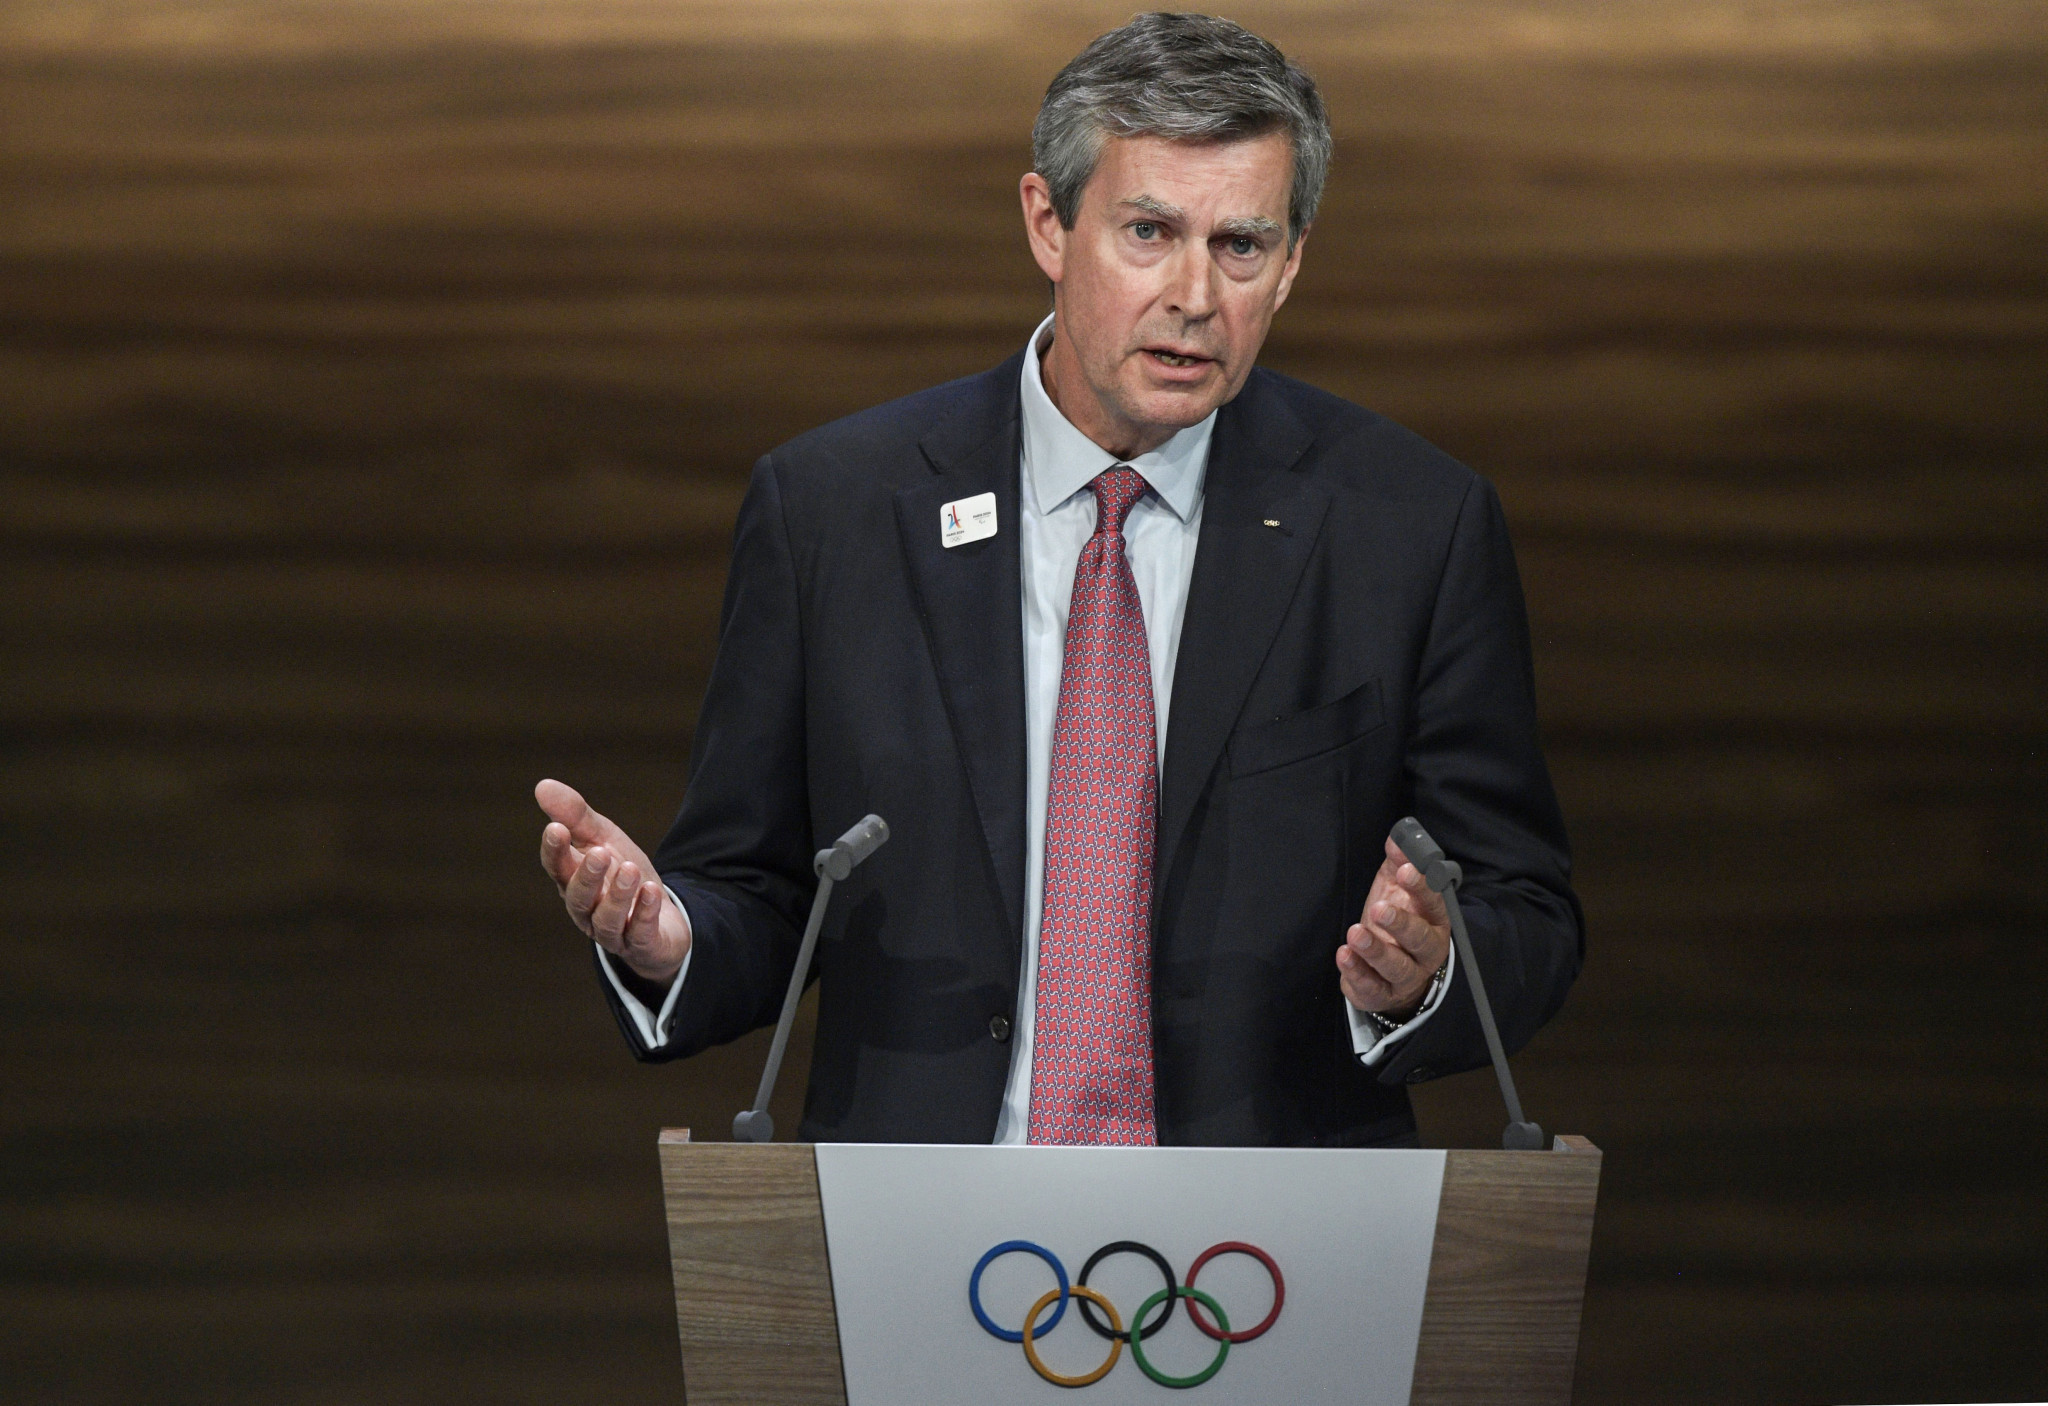 Pension reform protesters infiltrate Paris 2024 headquarters during IOC Coordination Commission visit